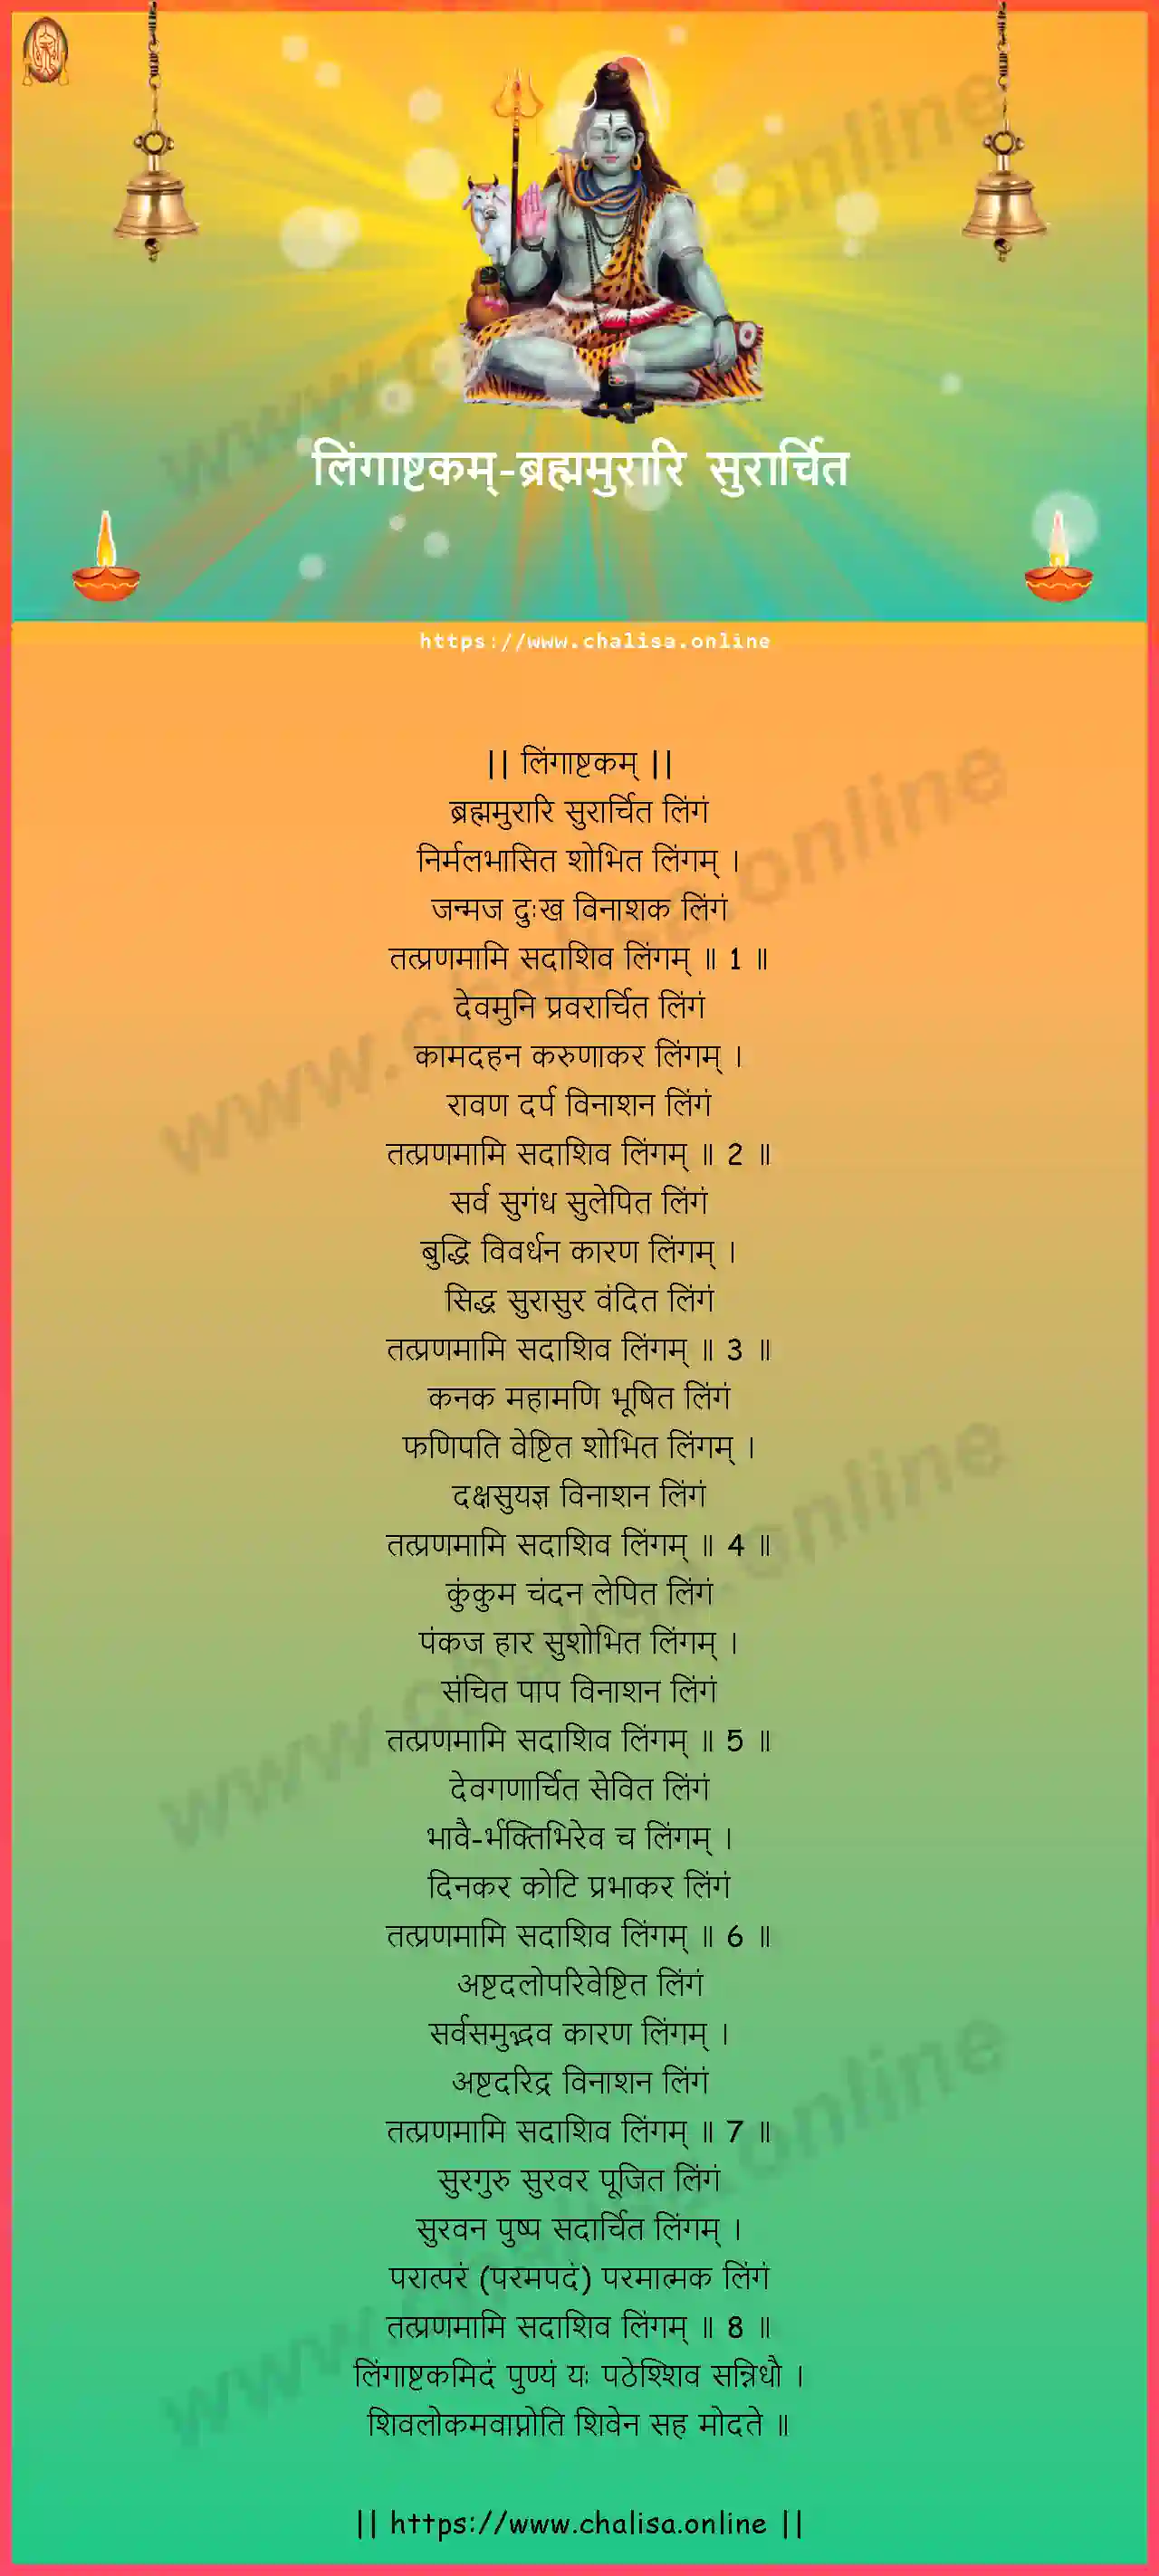 brahmamurari-surarchita-lingashtakam-marathi-marathi-lyrics-download